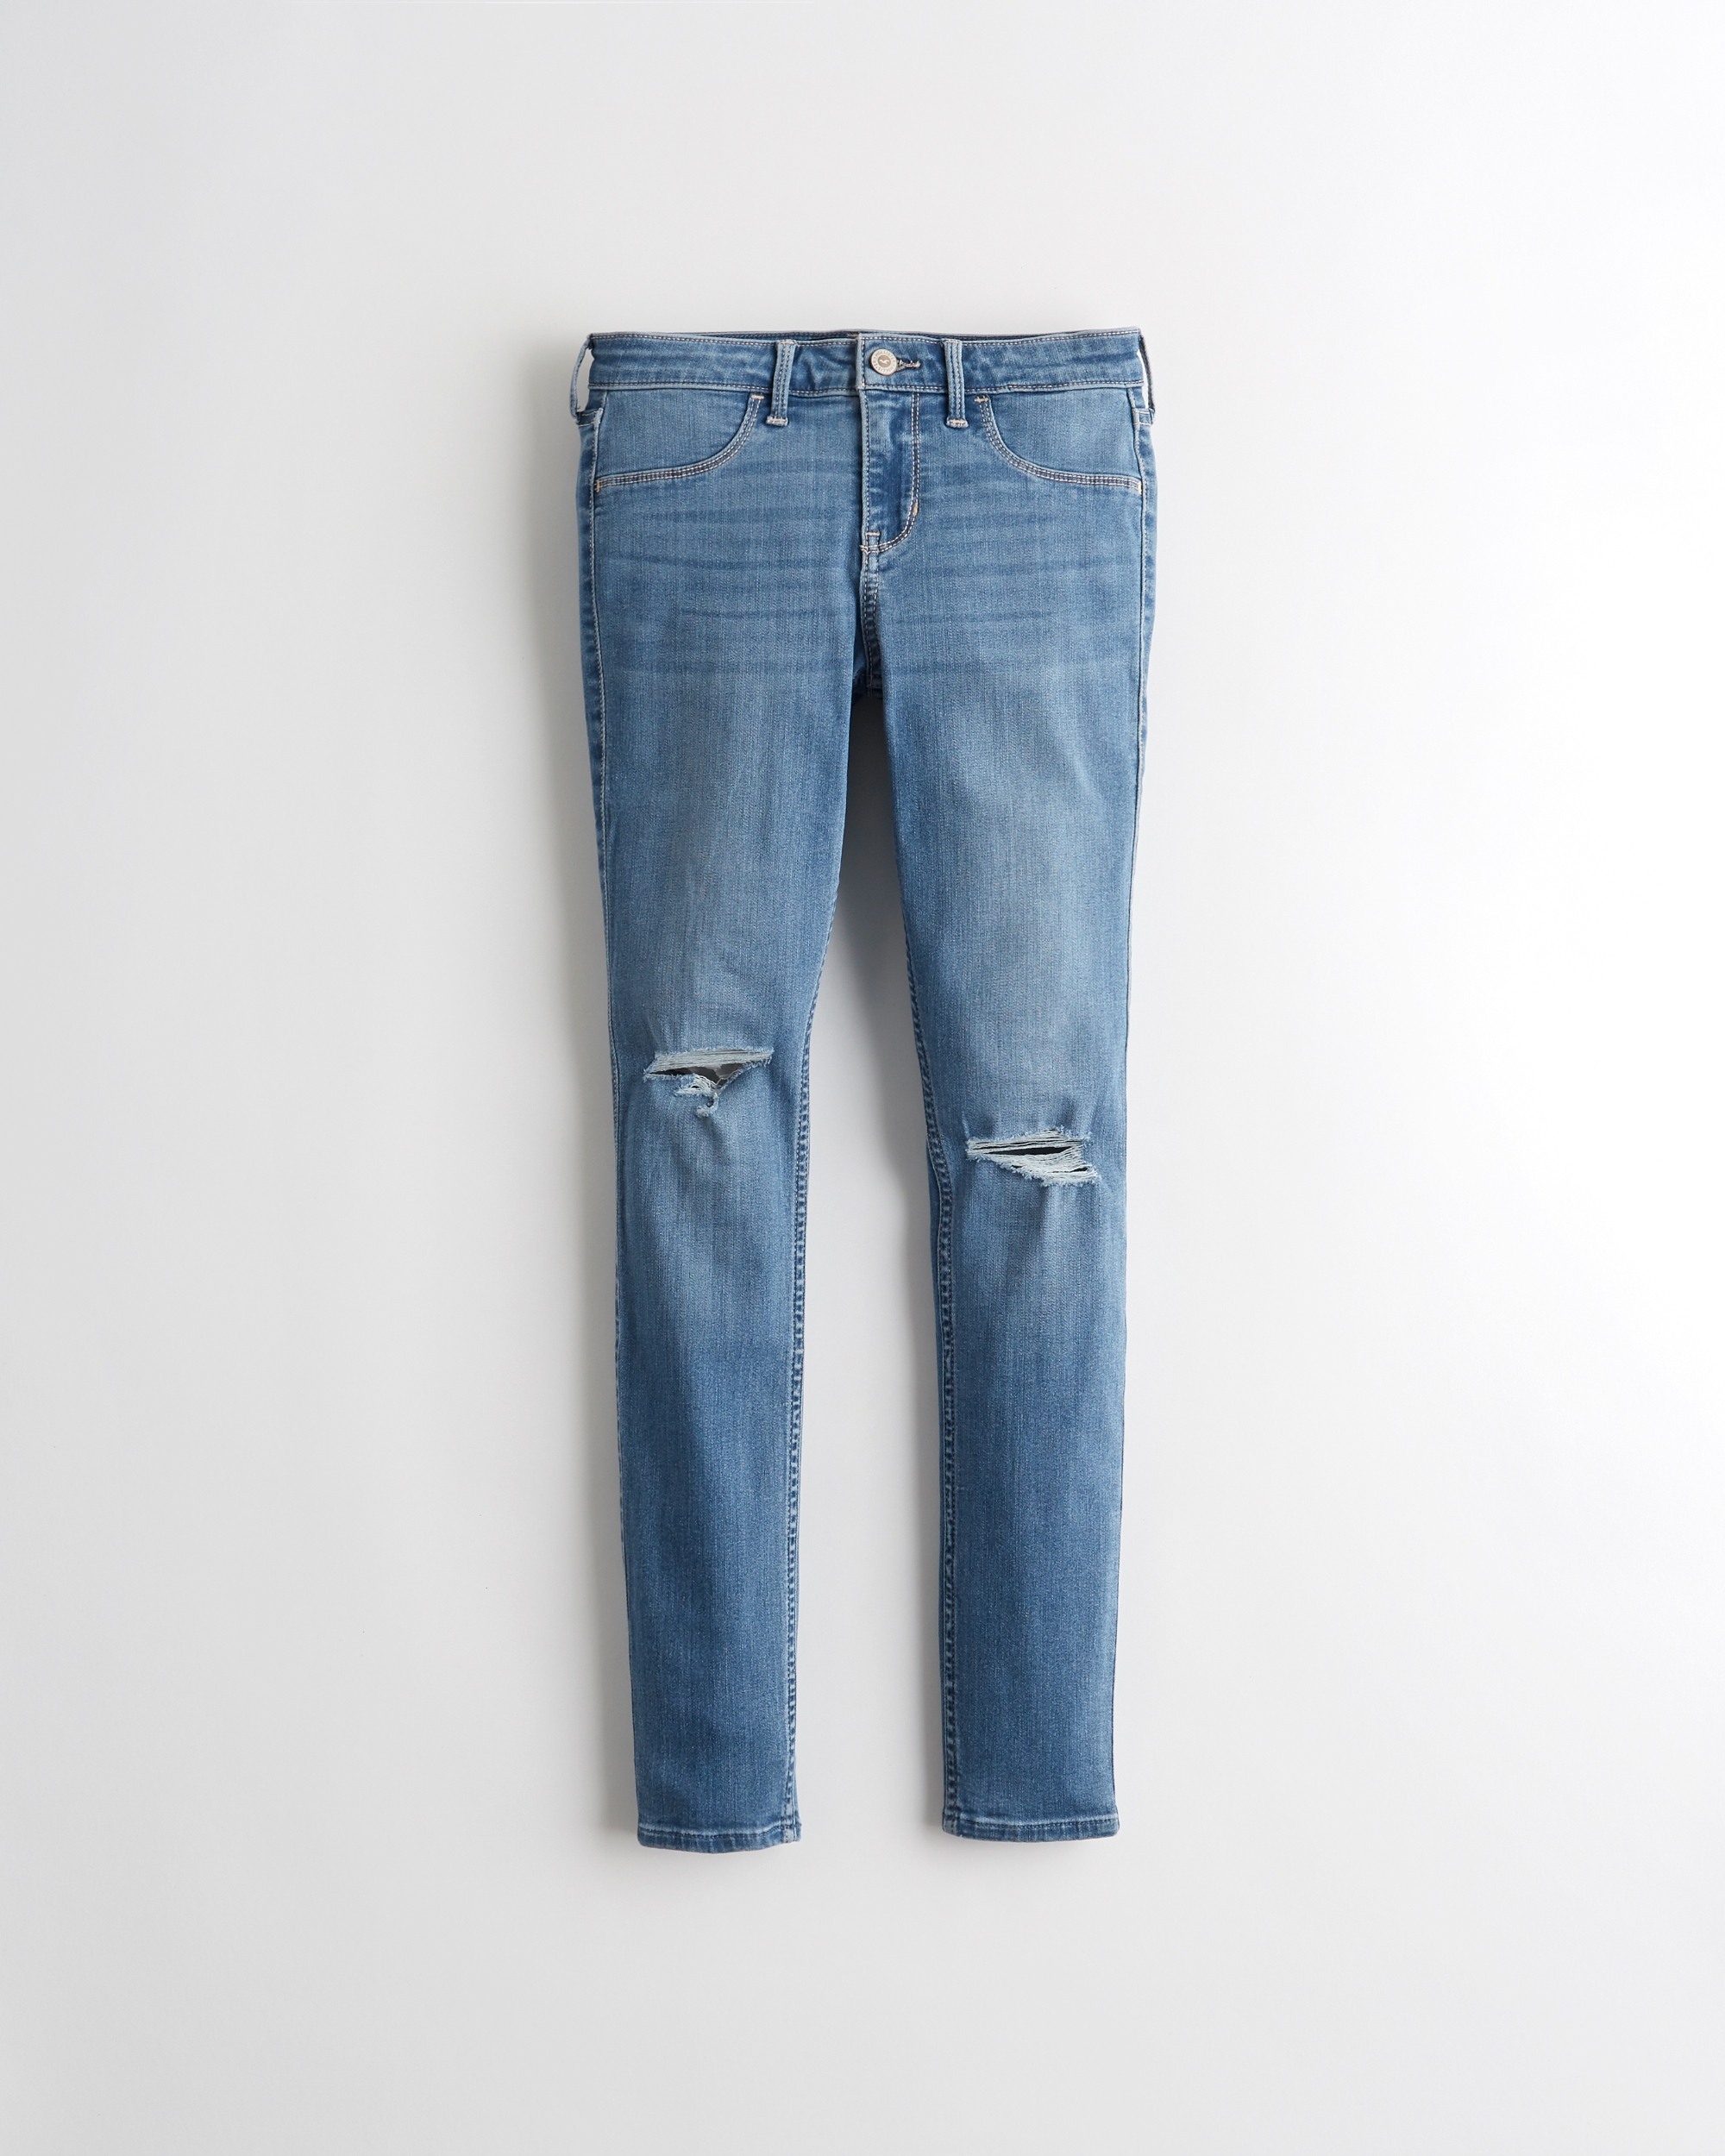 hollister jeans short length